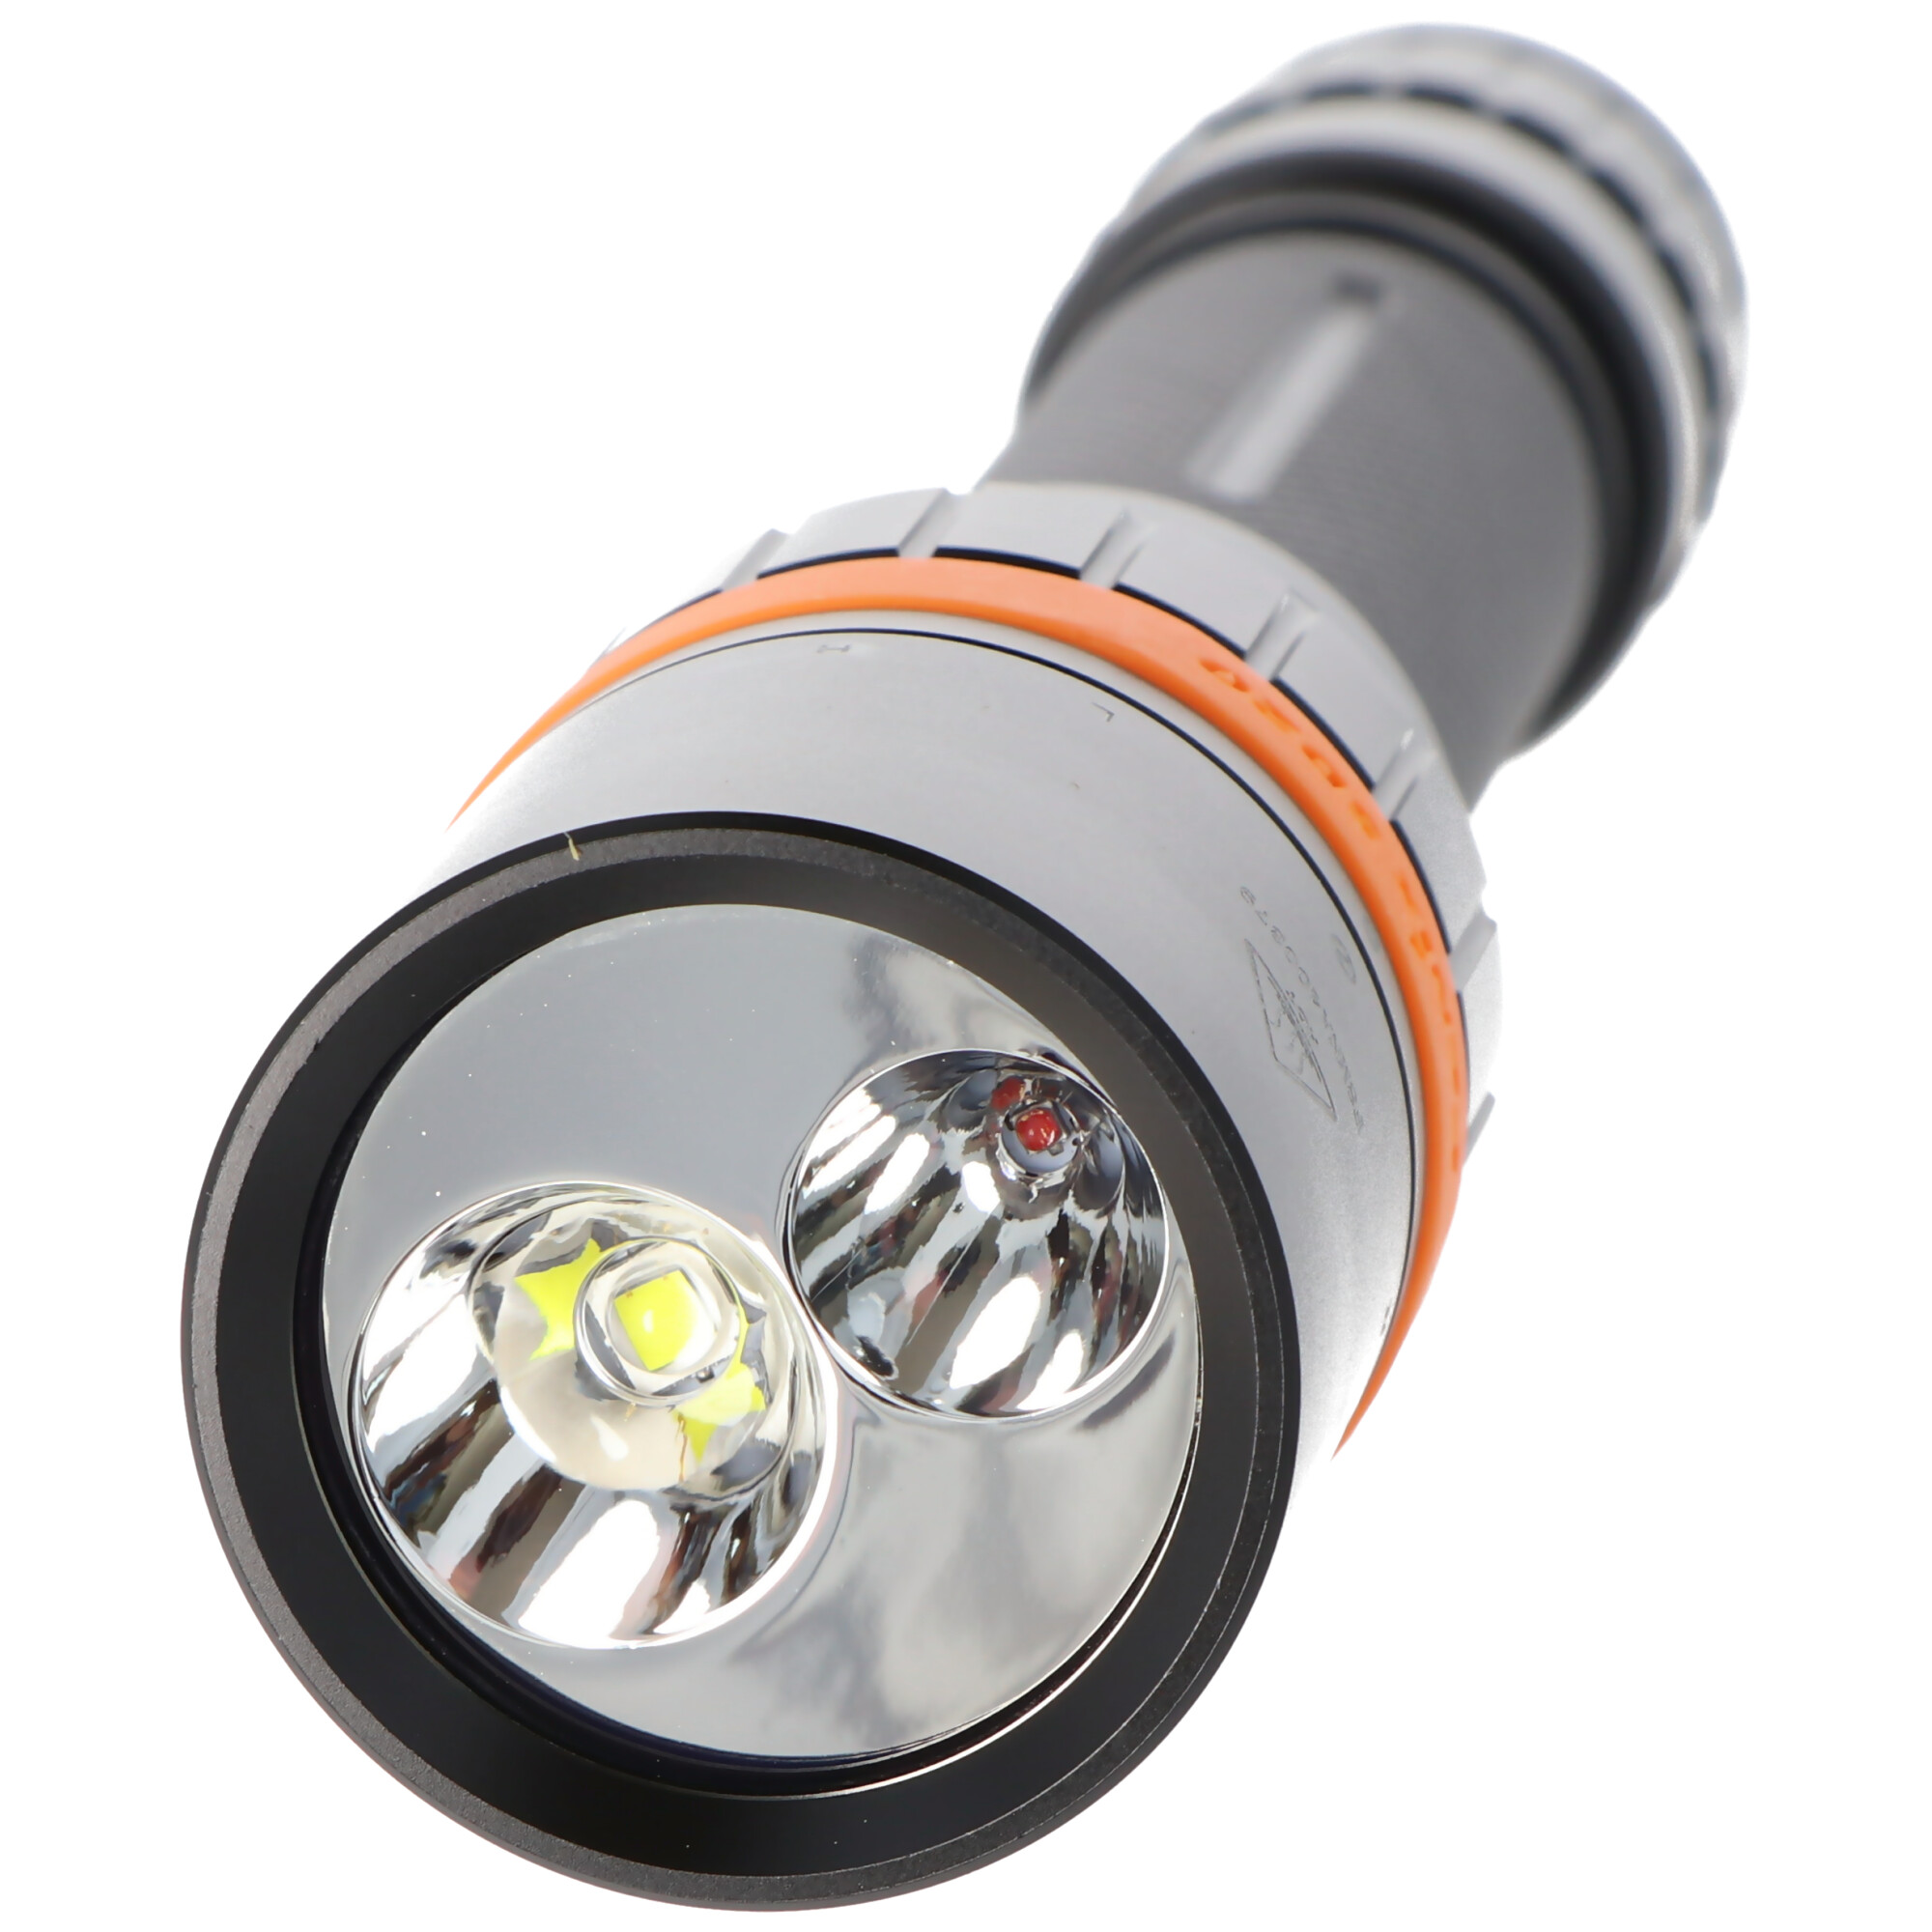 Taucherlampe Fenix SD20 Cree XM-L2 U2 and Cree XQE Red LED Tauchlampe, Lieferung ohne Batterie, Akku